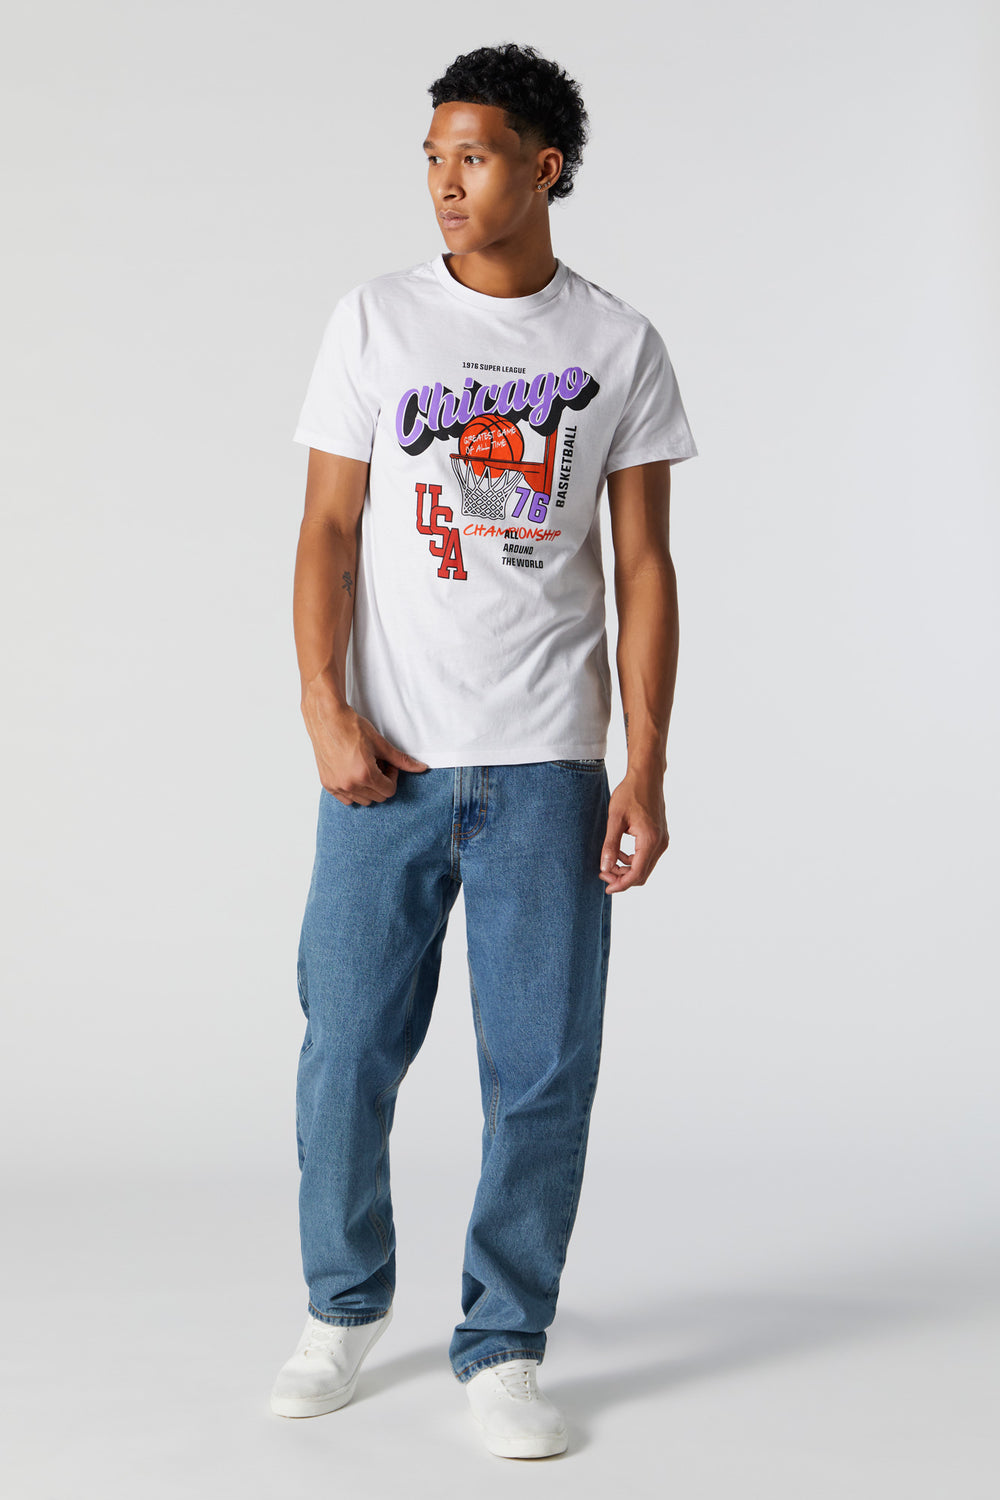 Chicago Basketball Graphic T-Shirt Chicago Basketball Graphic T-Shirt 3